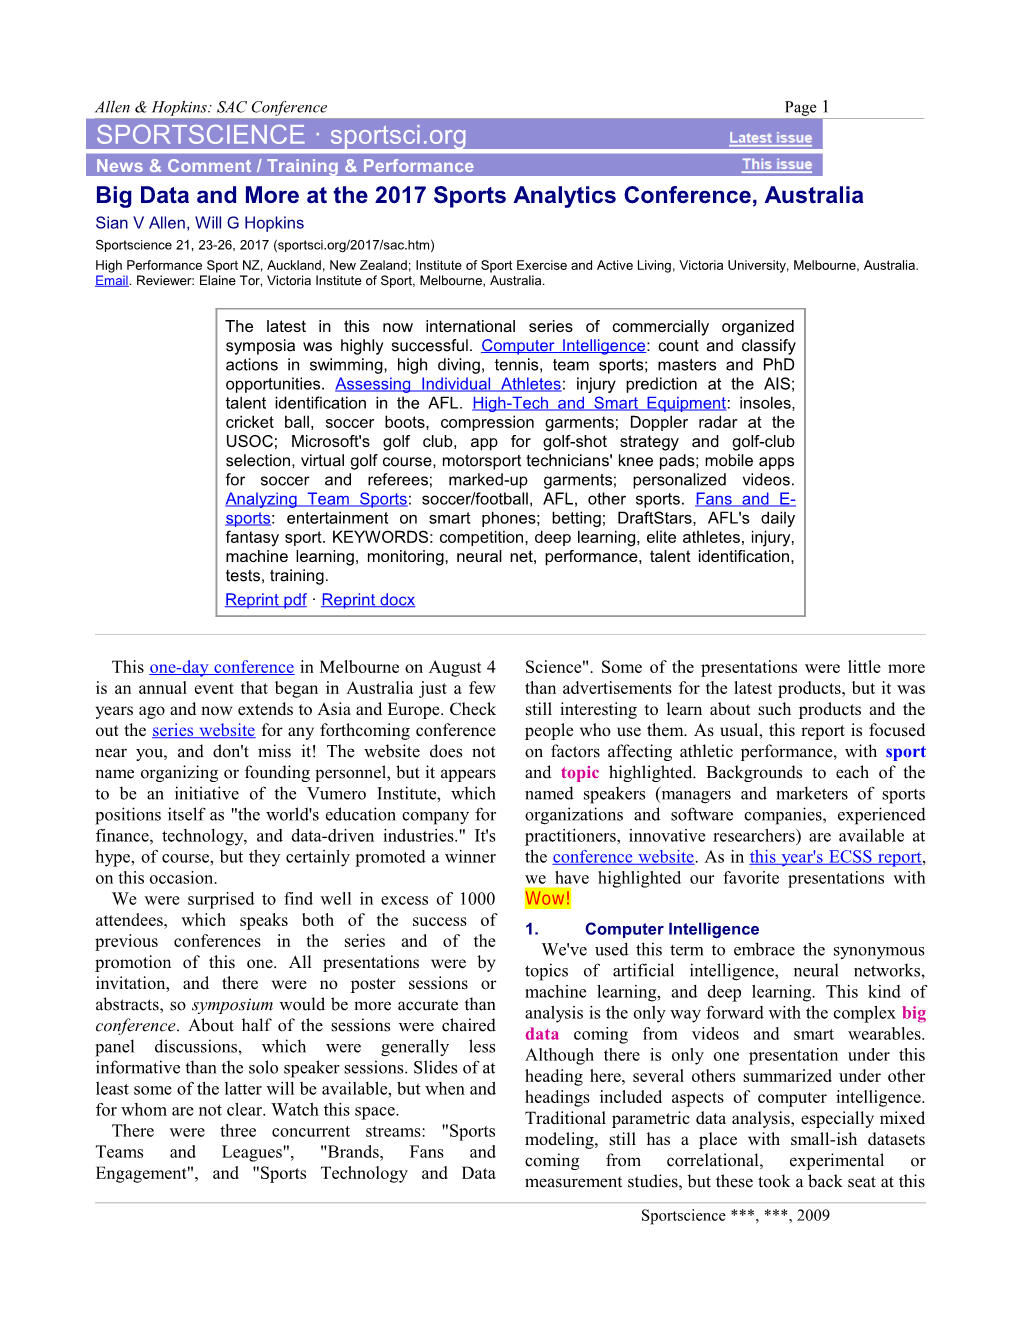 Sports Analytics Conference 2017 Australia